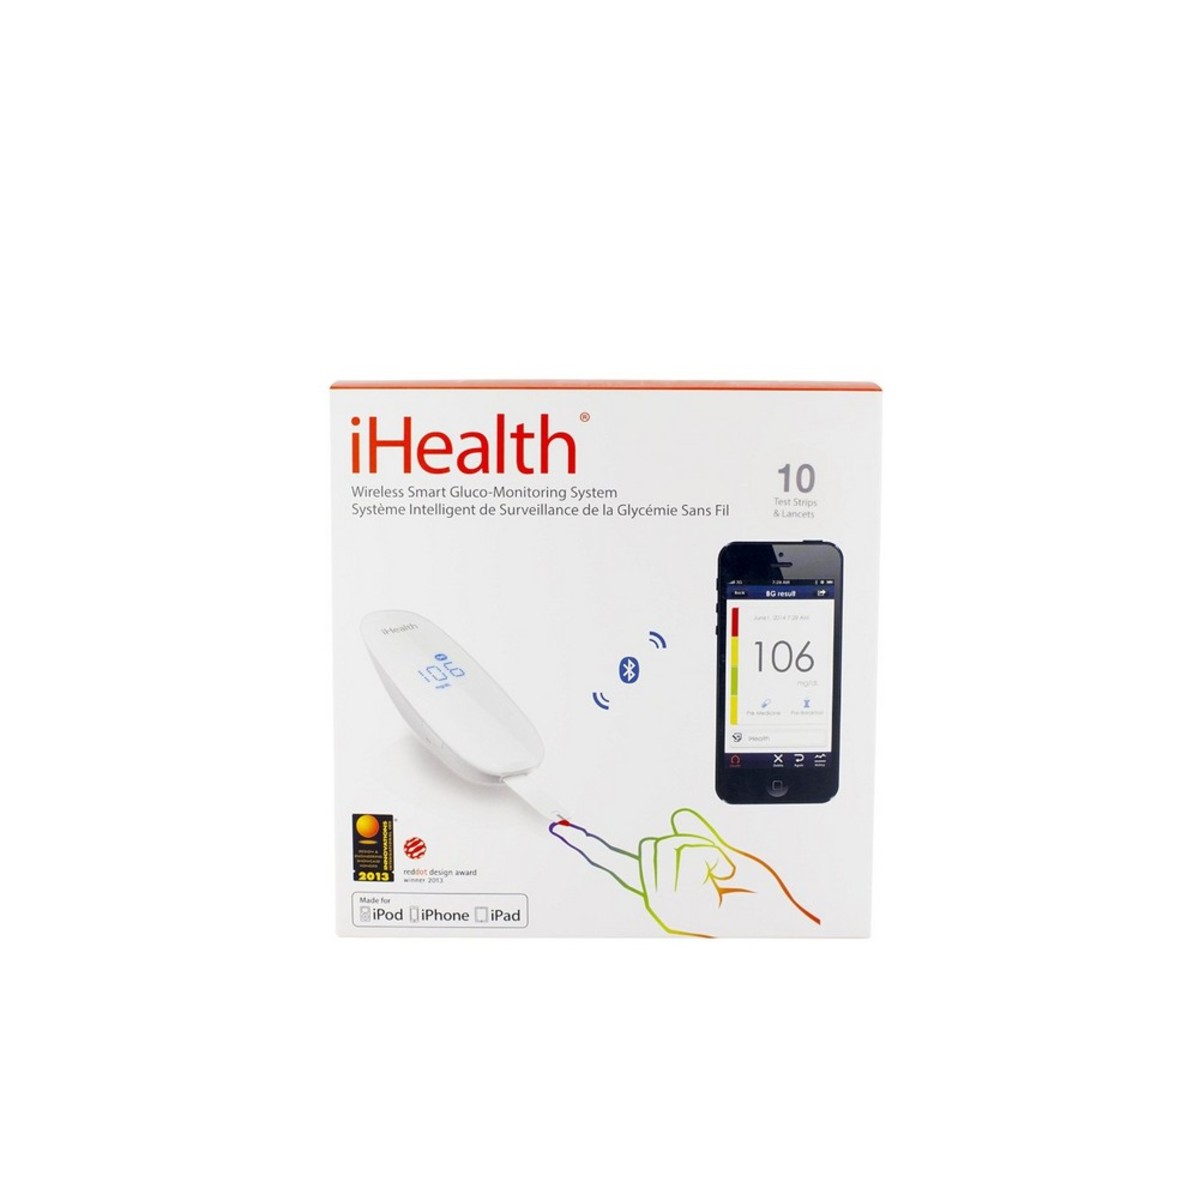 iHealth Wireless Smart Glucose Monitor BG5